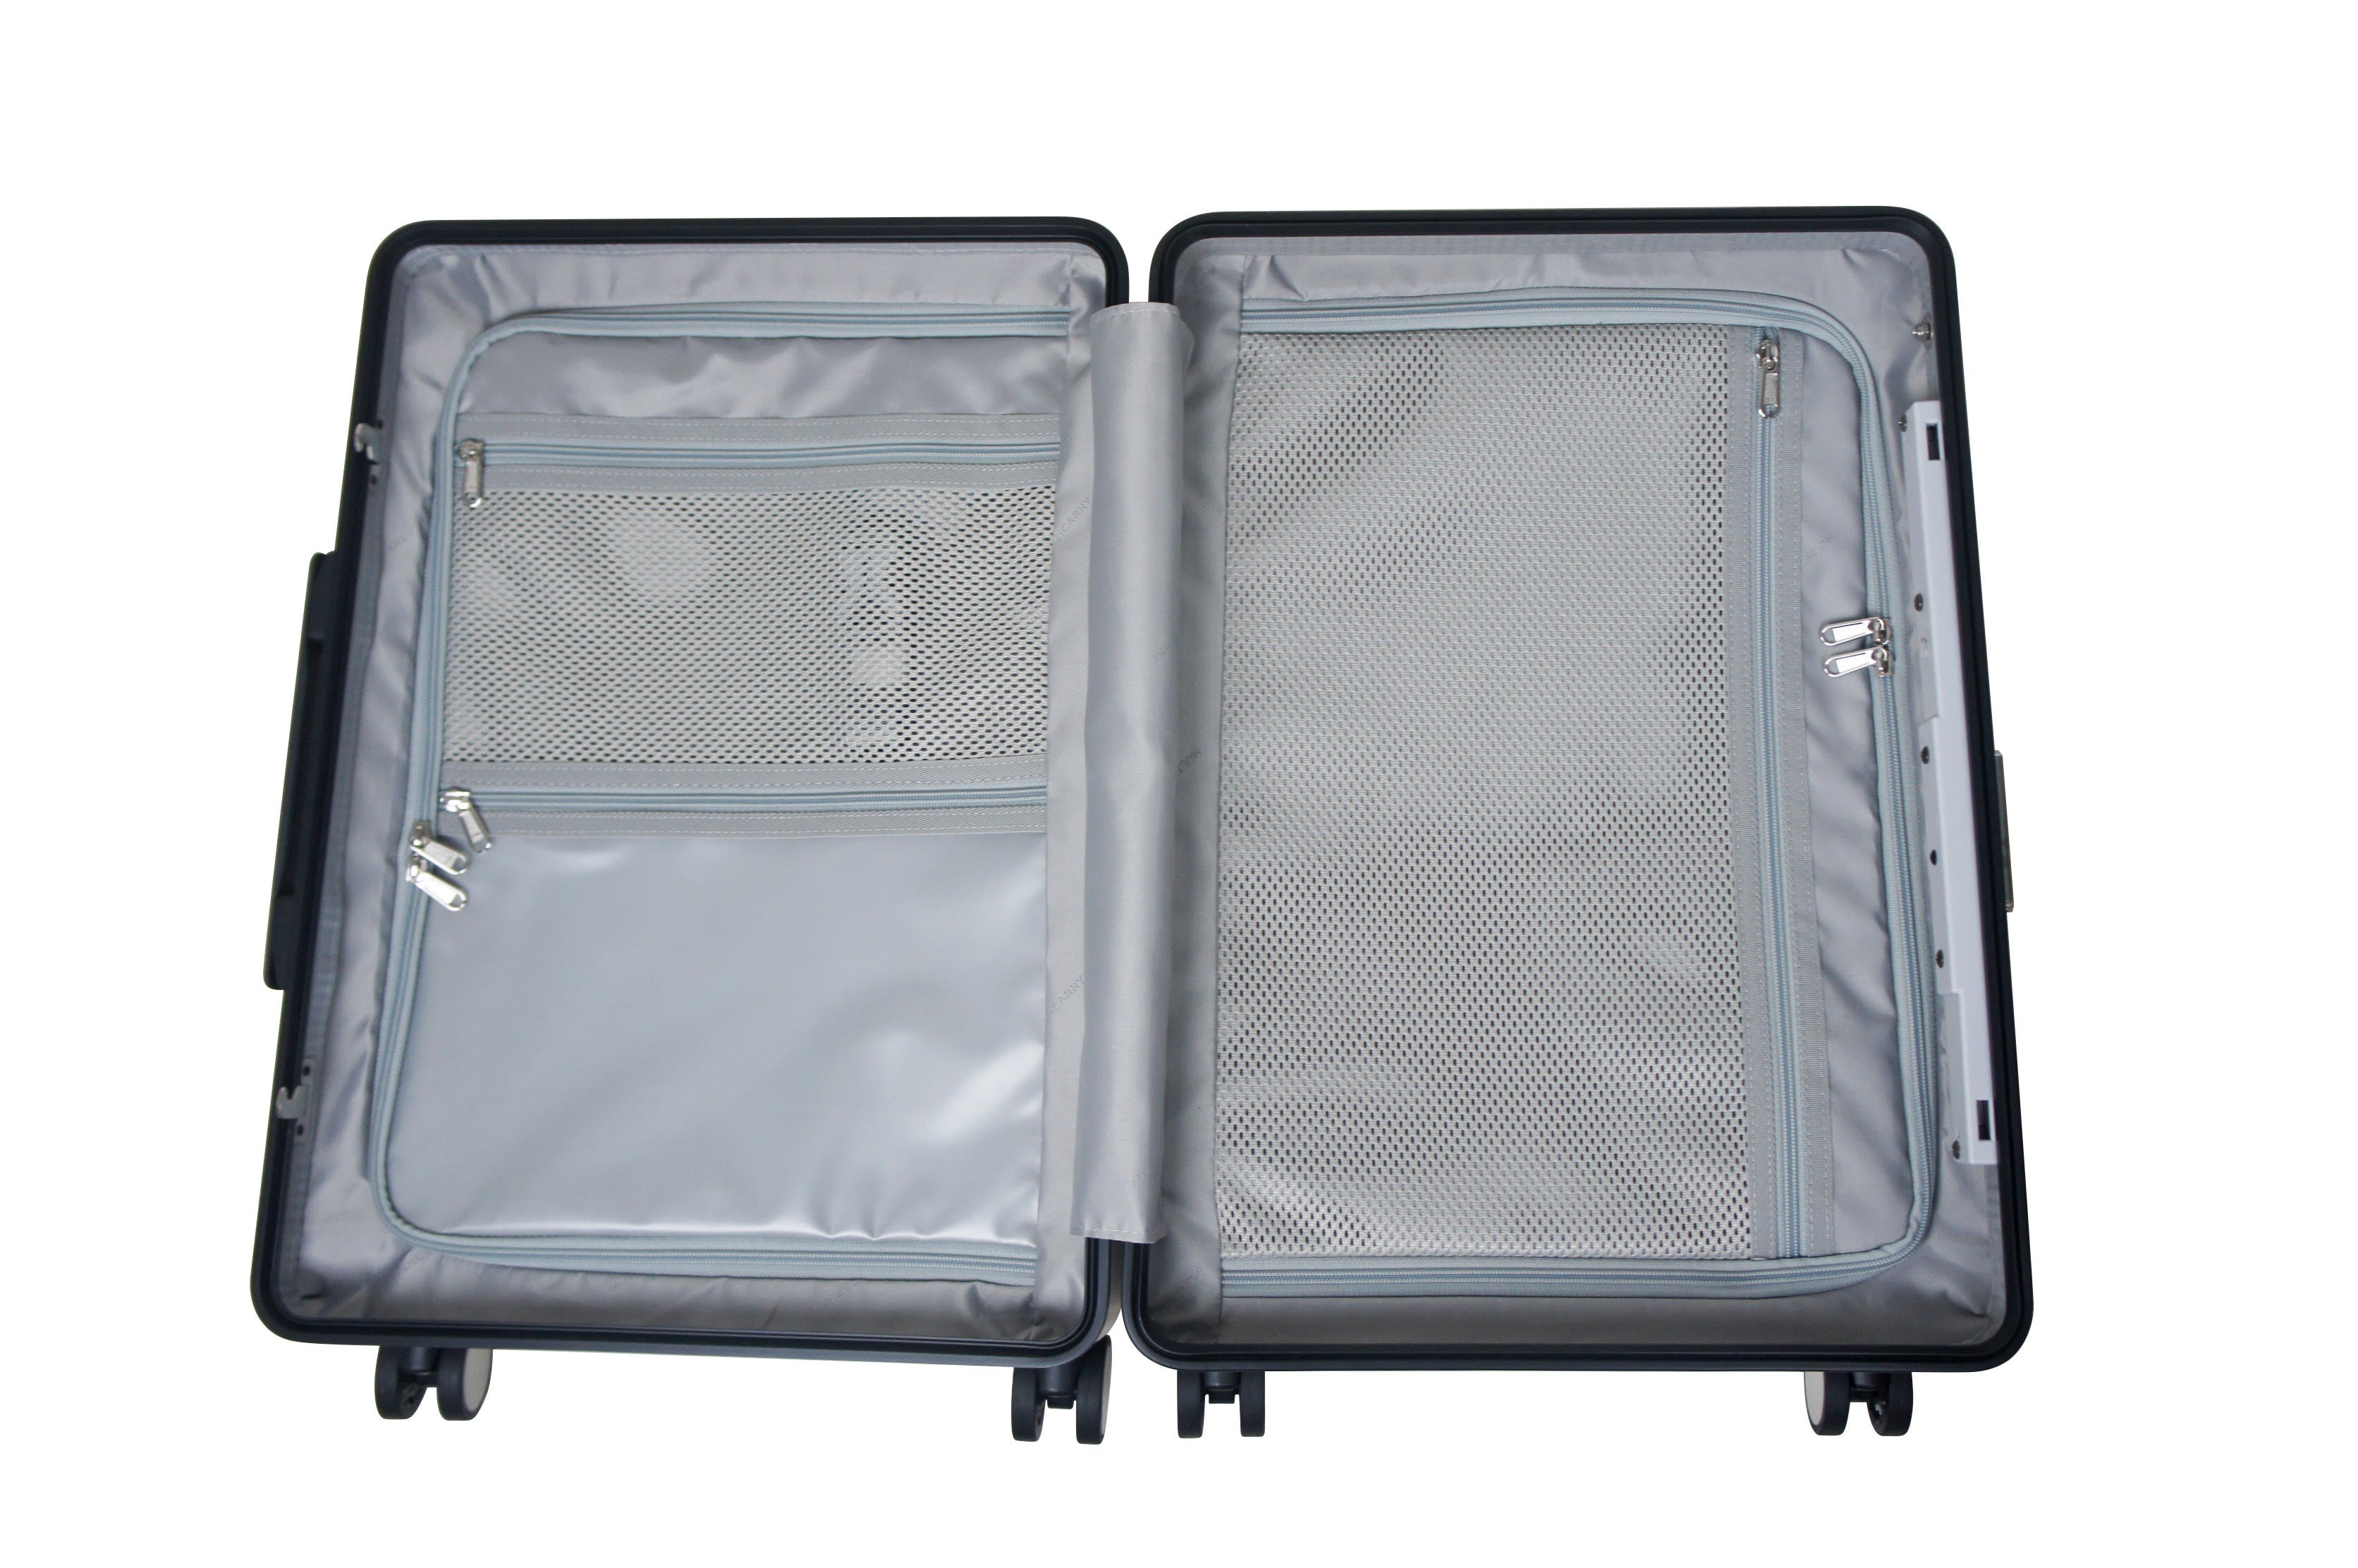 miamily luggage 18 inch mist grey